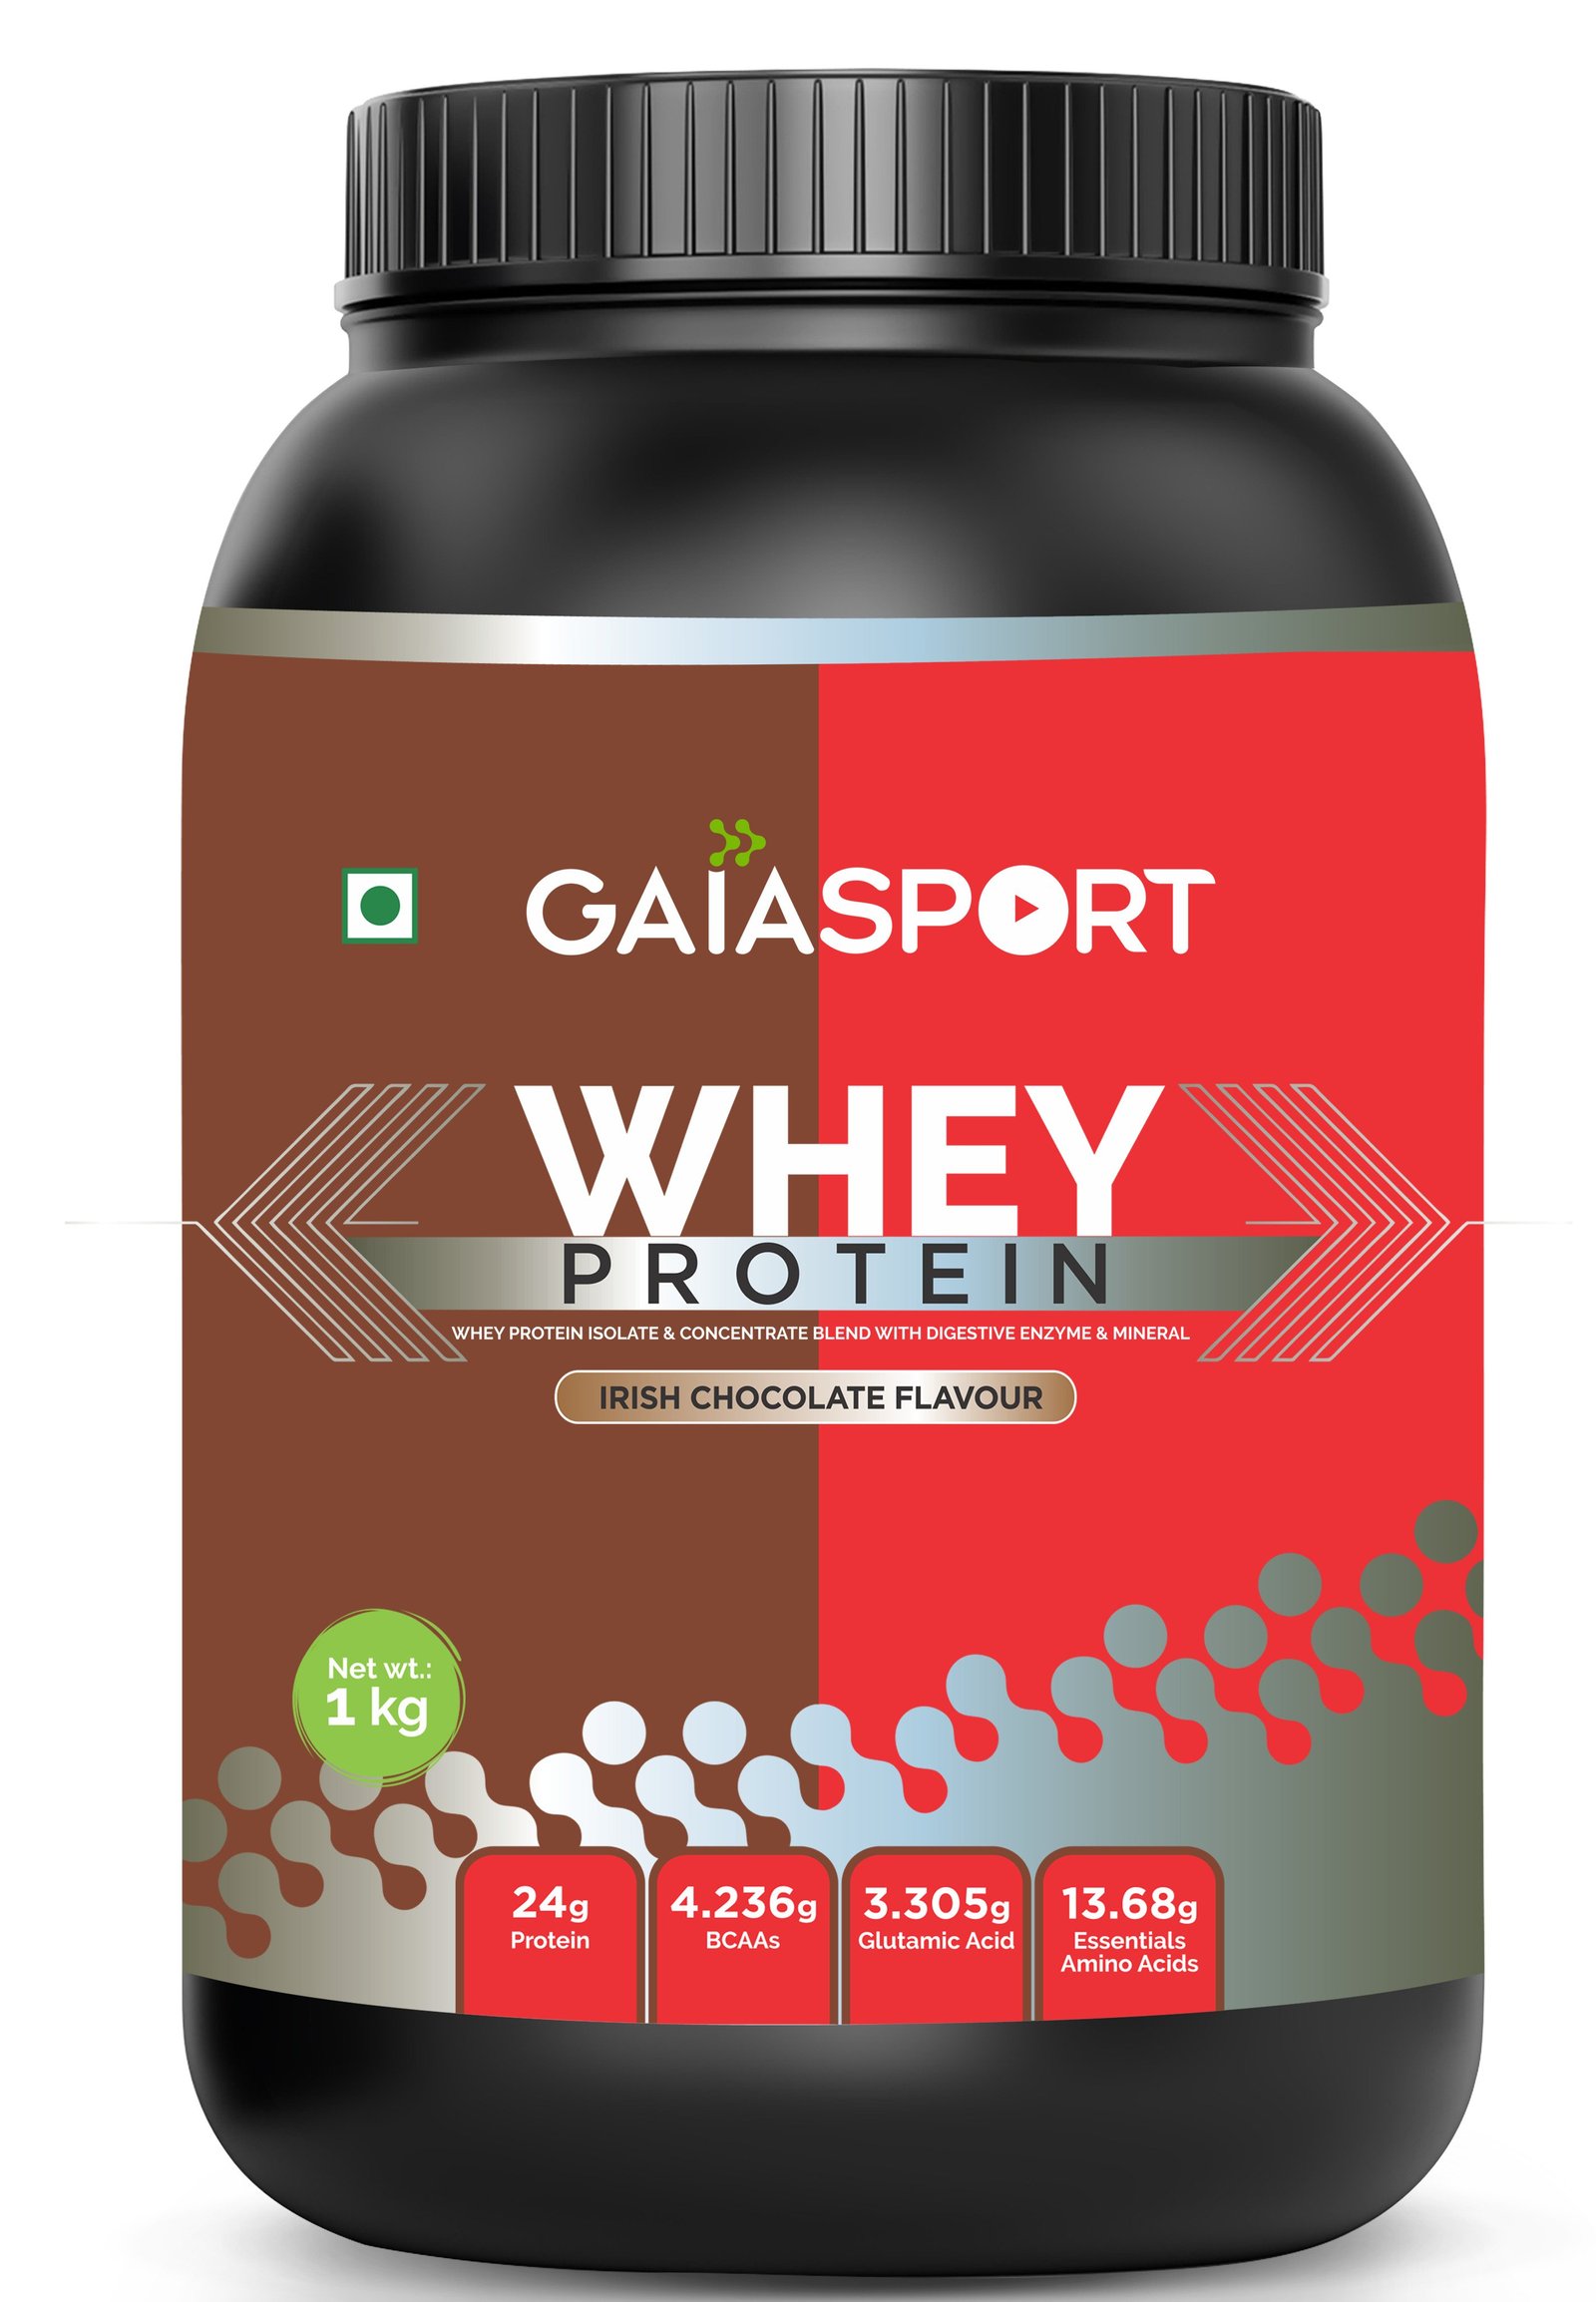 Health & wellness brand Gaia launches whey protein